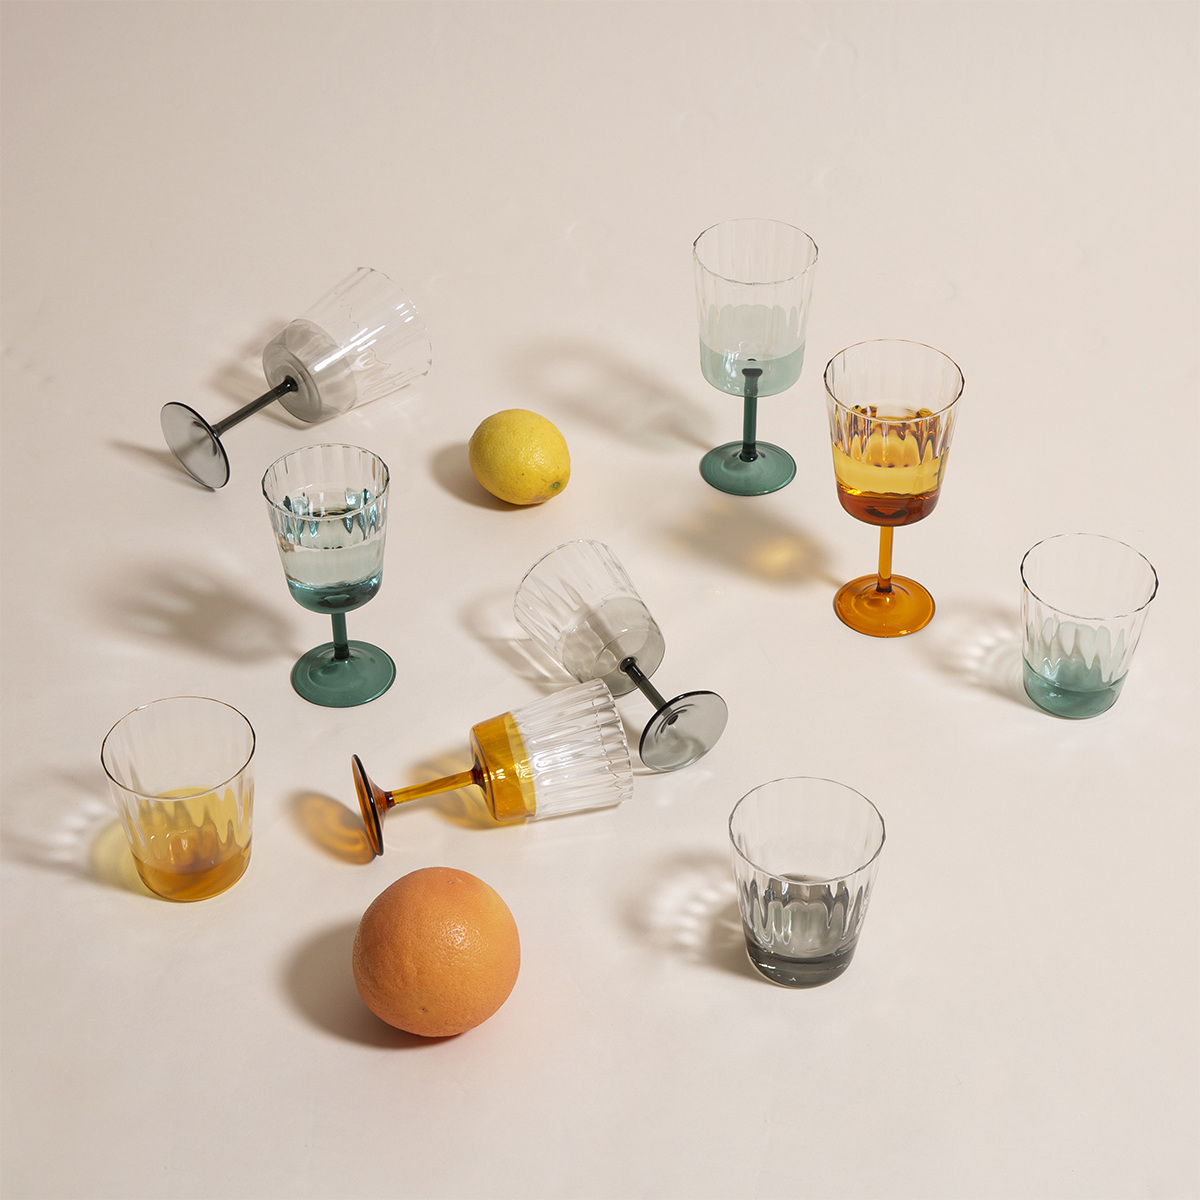 6 Wine Glasses Eclat, Transparent - Blown glass - image 6